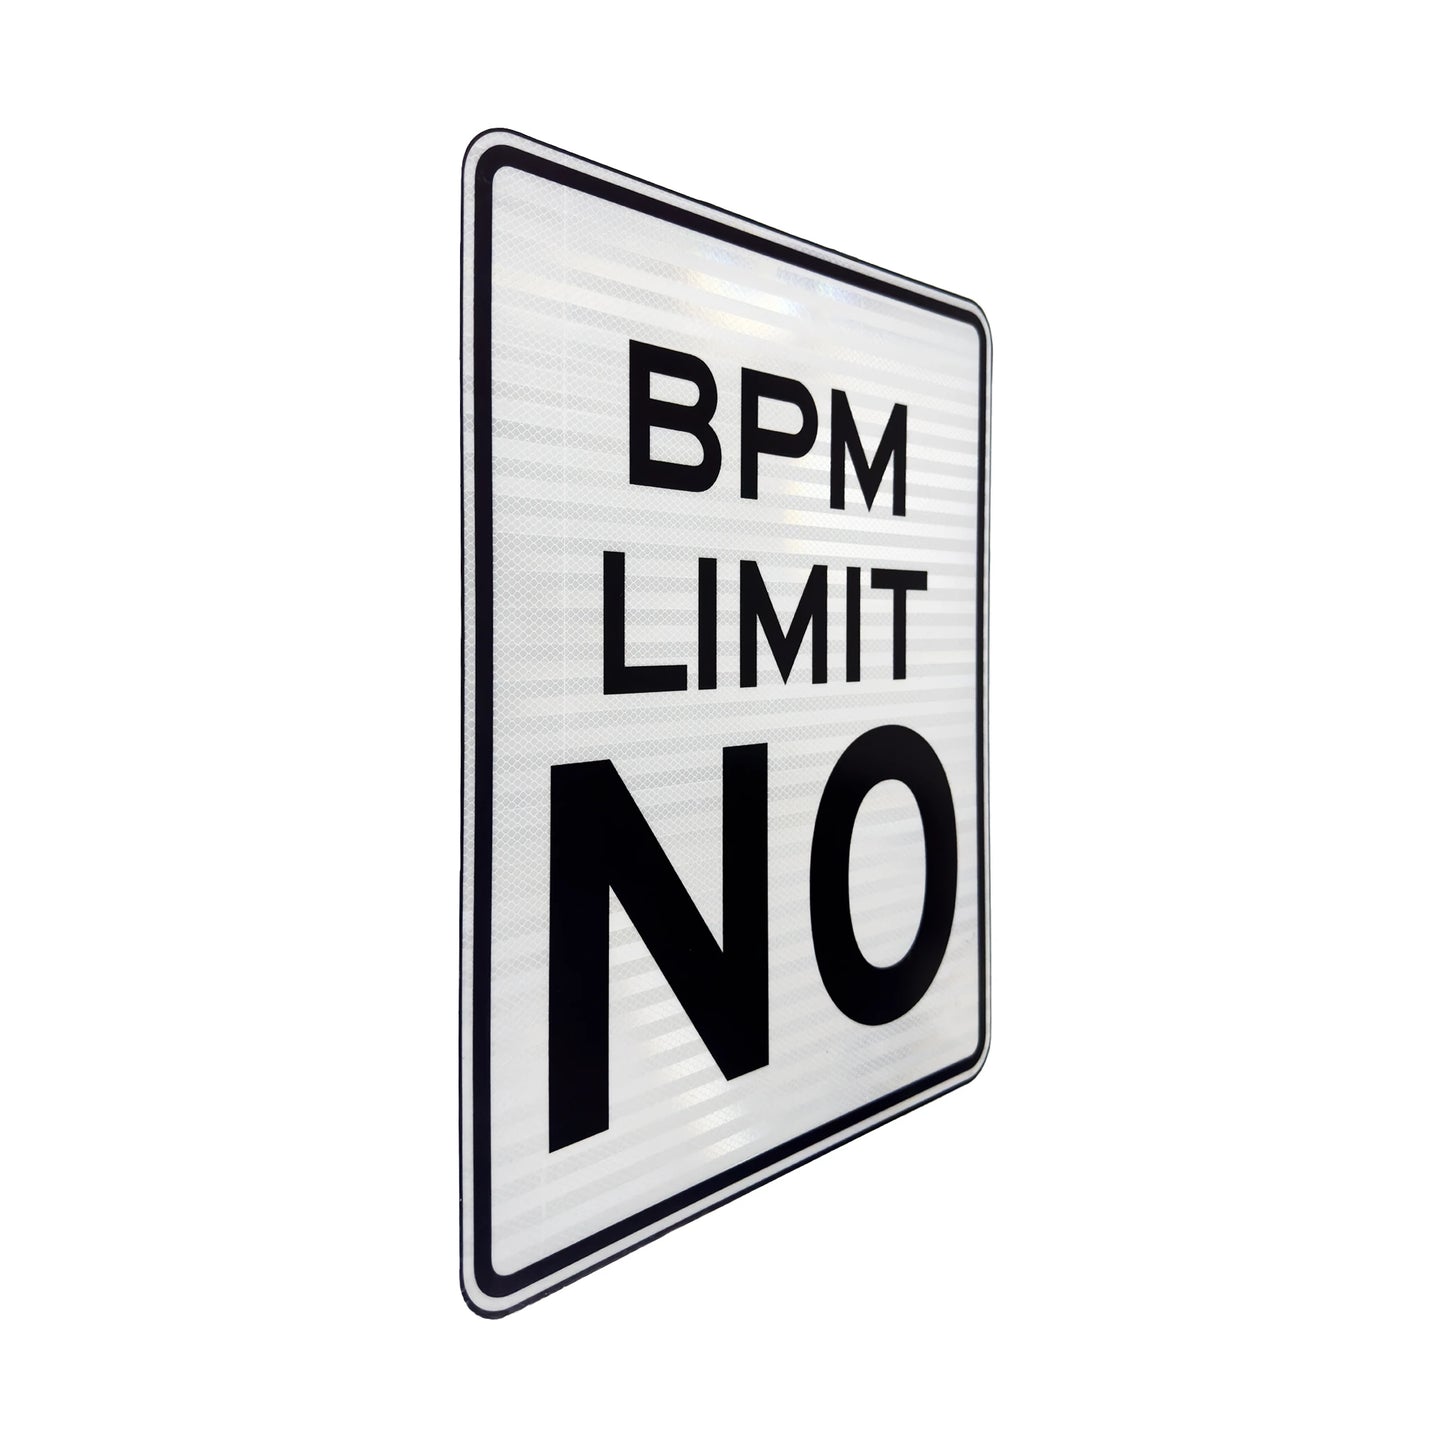 NO BPM LIMIT Streetsign